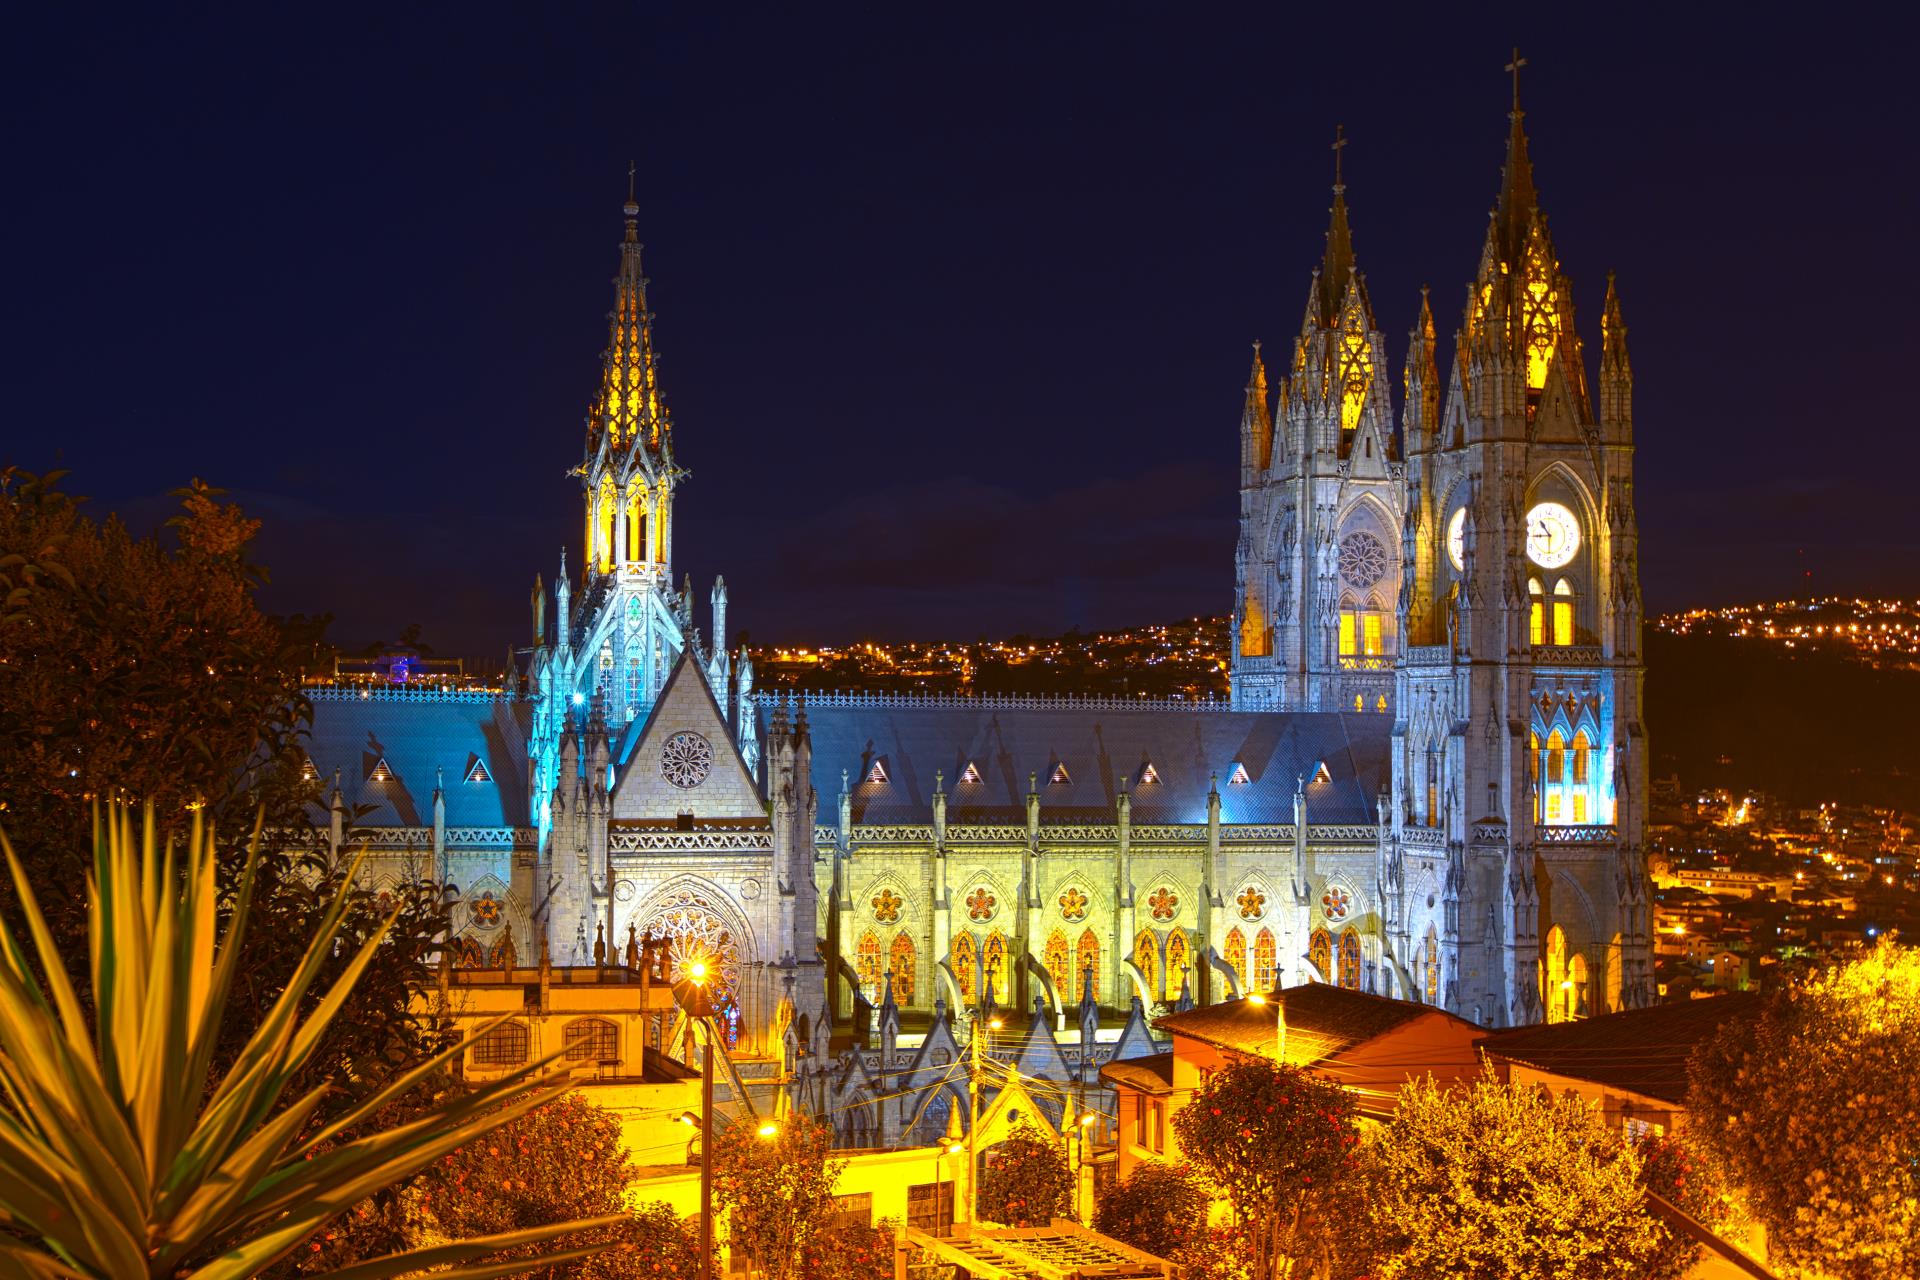 Quito Basilica at night 